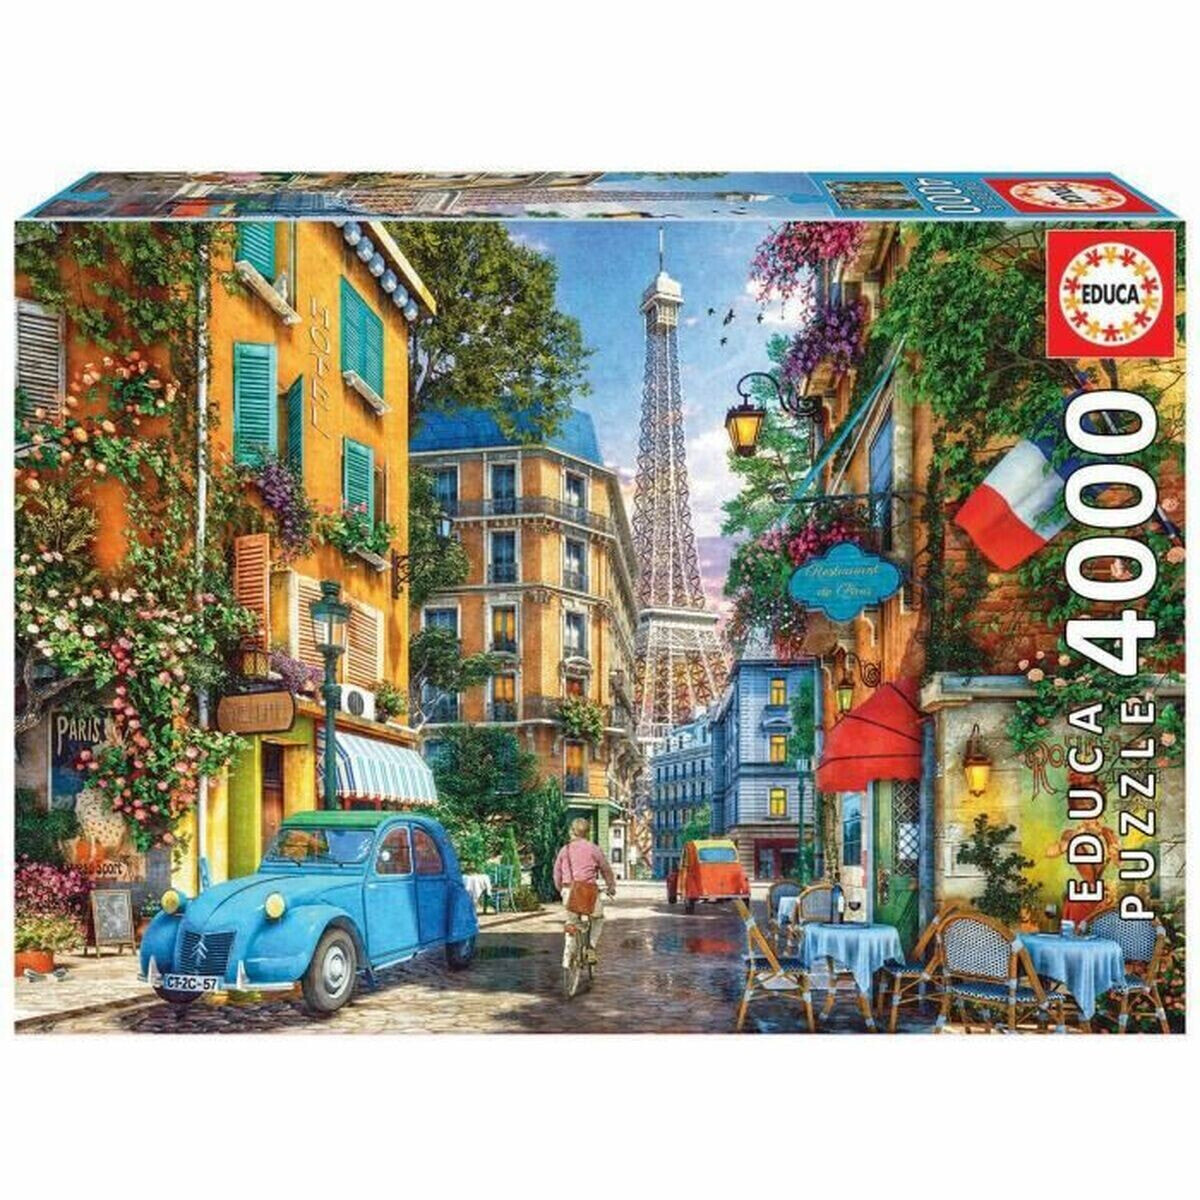 Puzzle Educa The old streets of Paris 19284 4000 Pieces